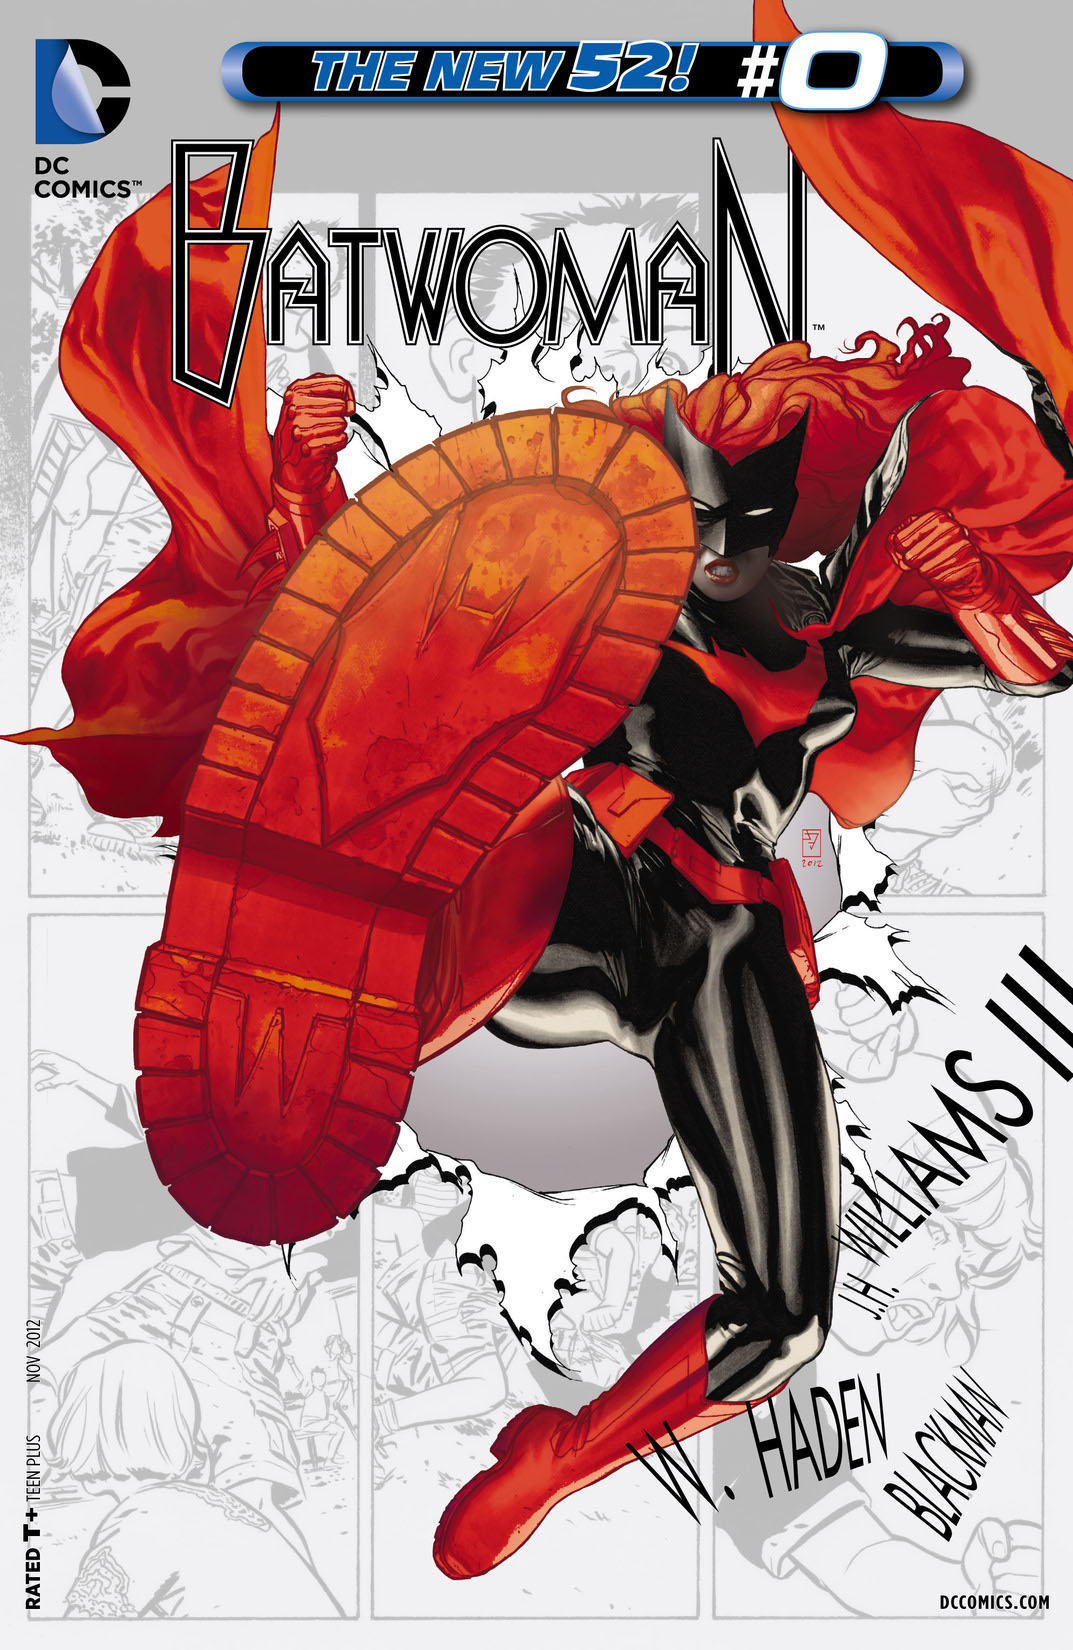 Batwoman (2012-) #0 preview images